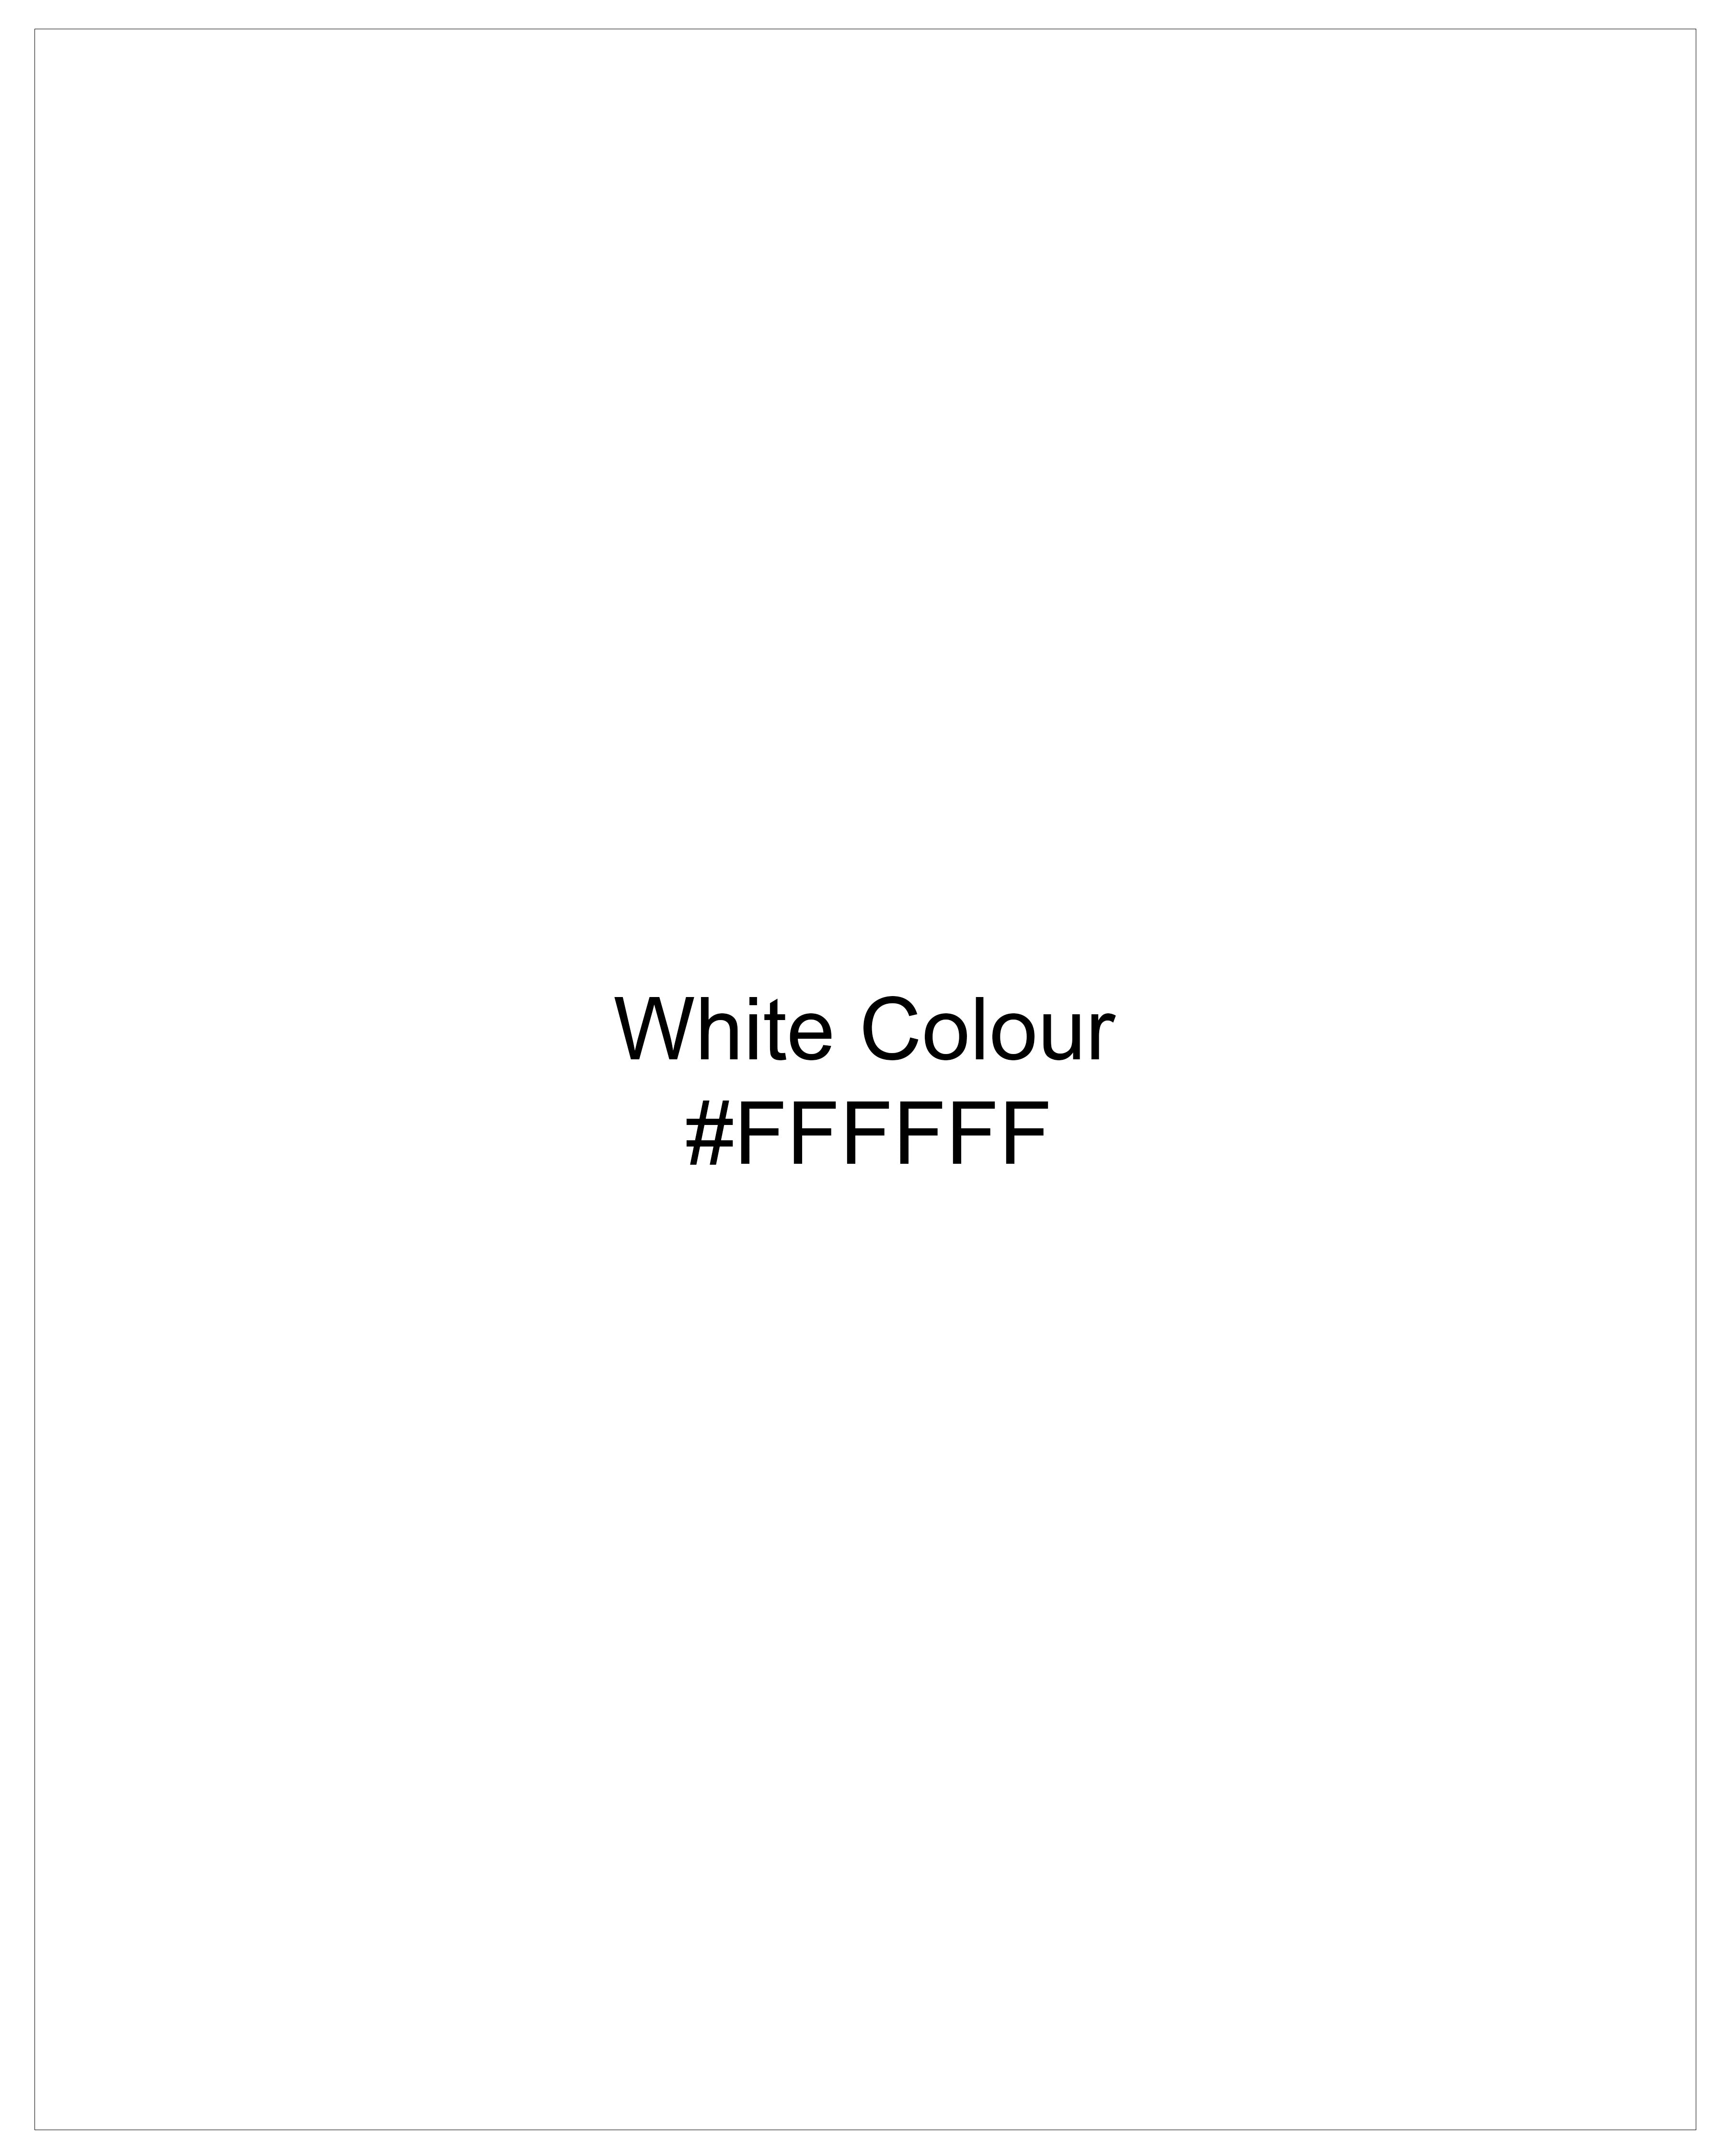 Bright White Super Soft Premium Cotton Designer Shirt with Black Collar and Cuffs 9730-BCC-ZP-P76-38,9730-BCC-ZP-P76-H-38,9730-BCC-ZP-P76-39,9730-BCC-ZP-P76-H-39,9730-BCC-ZP-P76-40,9730-BCC-ZP-P76-H-40,9730-BCC-ZP-P76-42,9730-BCC-ZP-P76-H-42,9730-BCC-ZP-P76-44,9730-BCC-ZP-P76-H-44,9730-BCC-ZP-P76-46,9730-BCC-ZP-P76-H-46,9730-BCC-ZP-P76-48,9730-BCC-ZP-P76-H-48,9730-BCC-ZP-P76-50,9730-BCC-ZP-P76-H-50,9730-BCC-ZP-P76-52,9730-BCC-ZP-P76-H-52